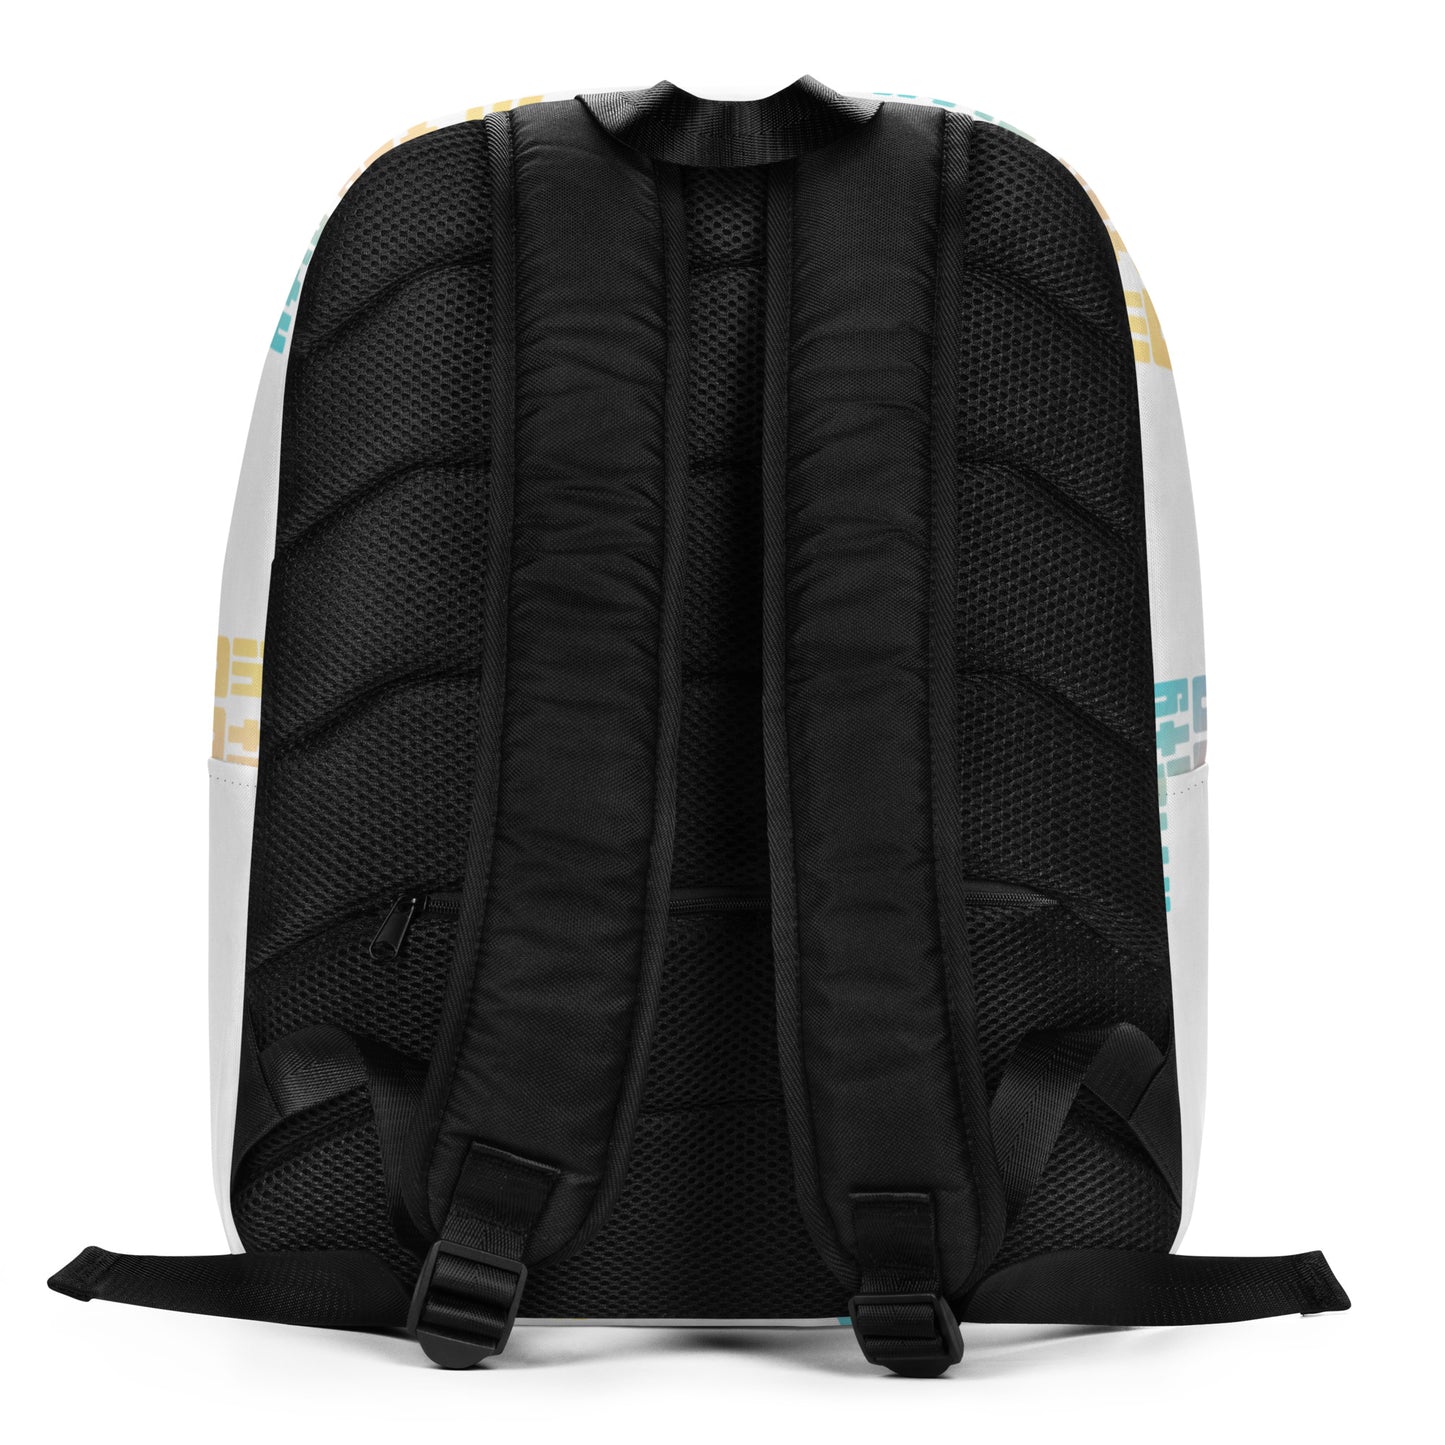 ITC Backpack